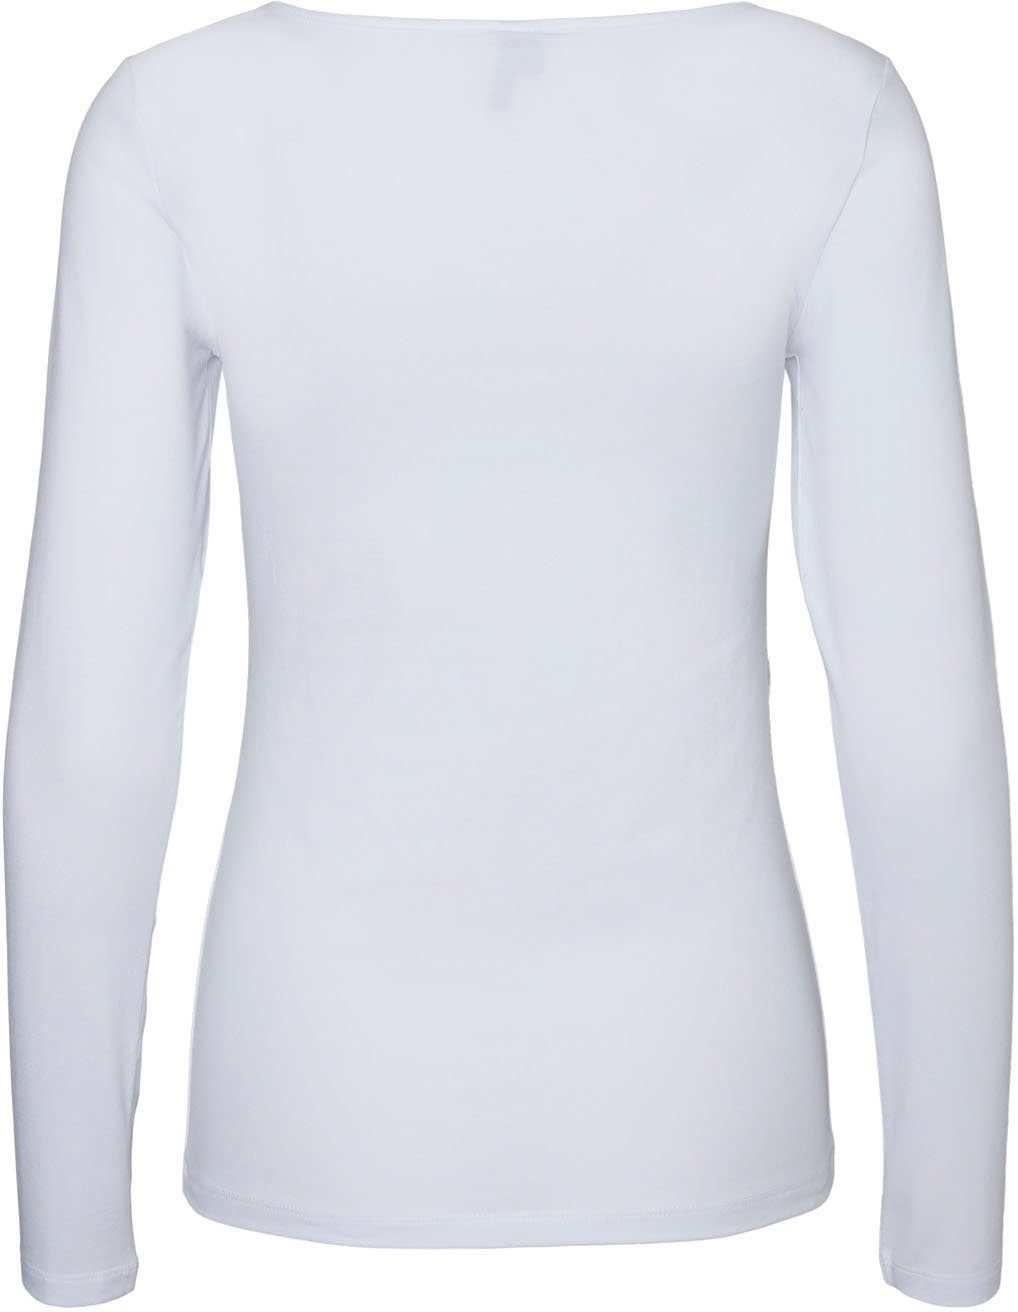 Moda aus VMMAXI Vero bright white Langarmshirt Bio-Baumwolle